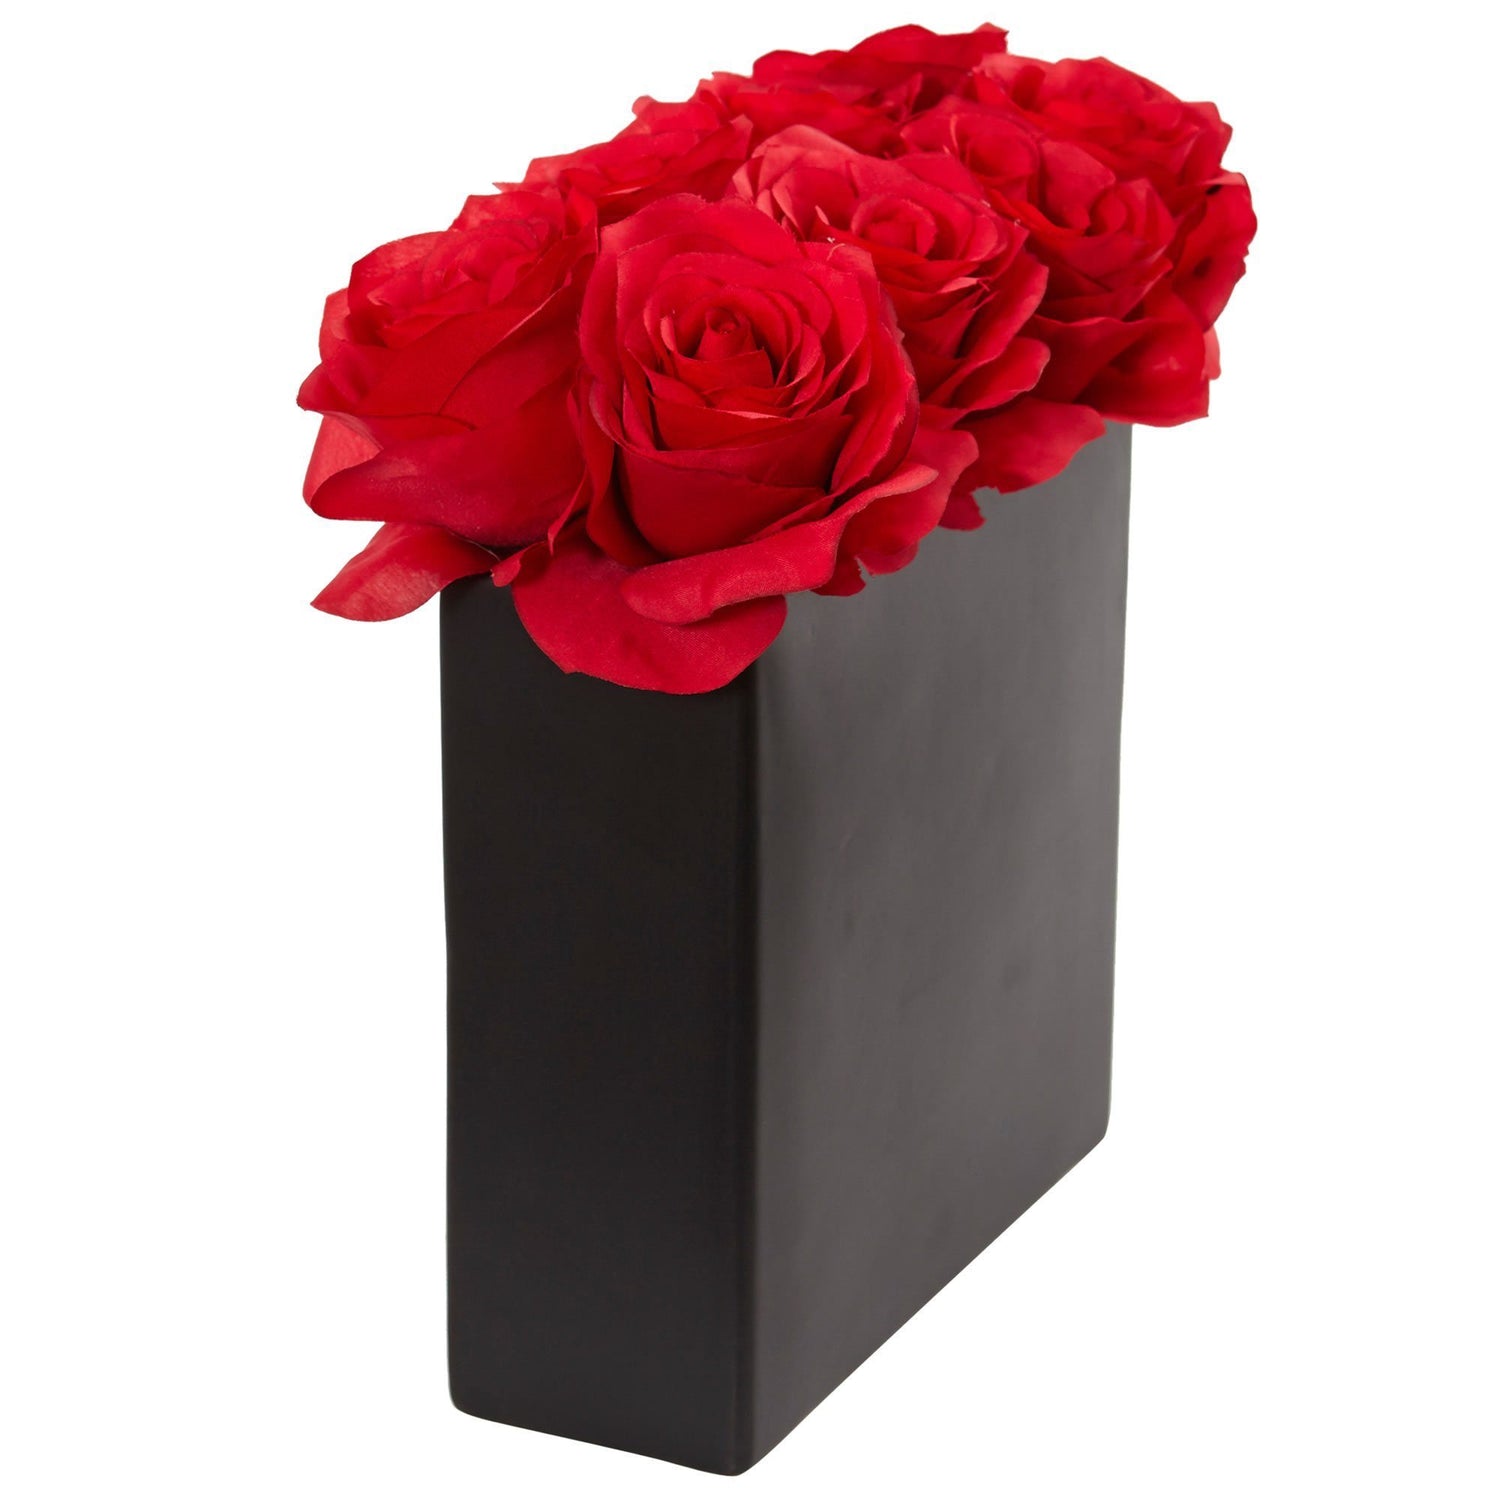 Roses Arrangement in Black Vase